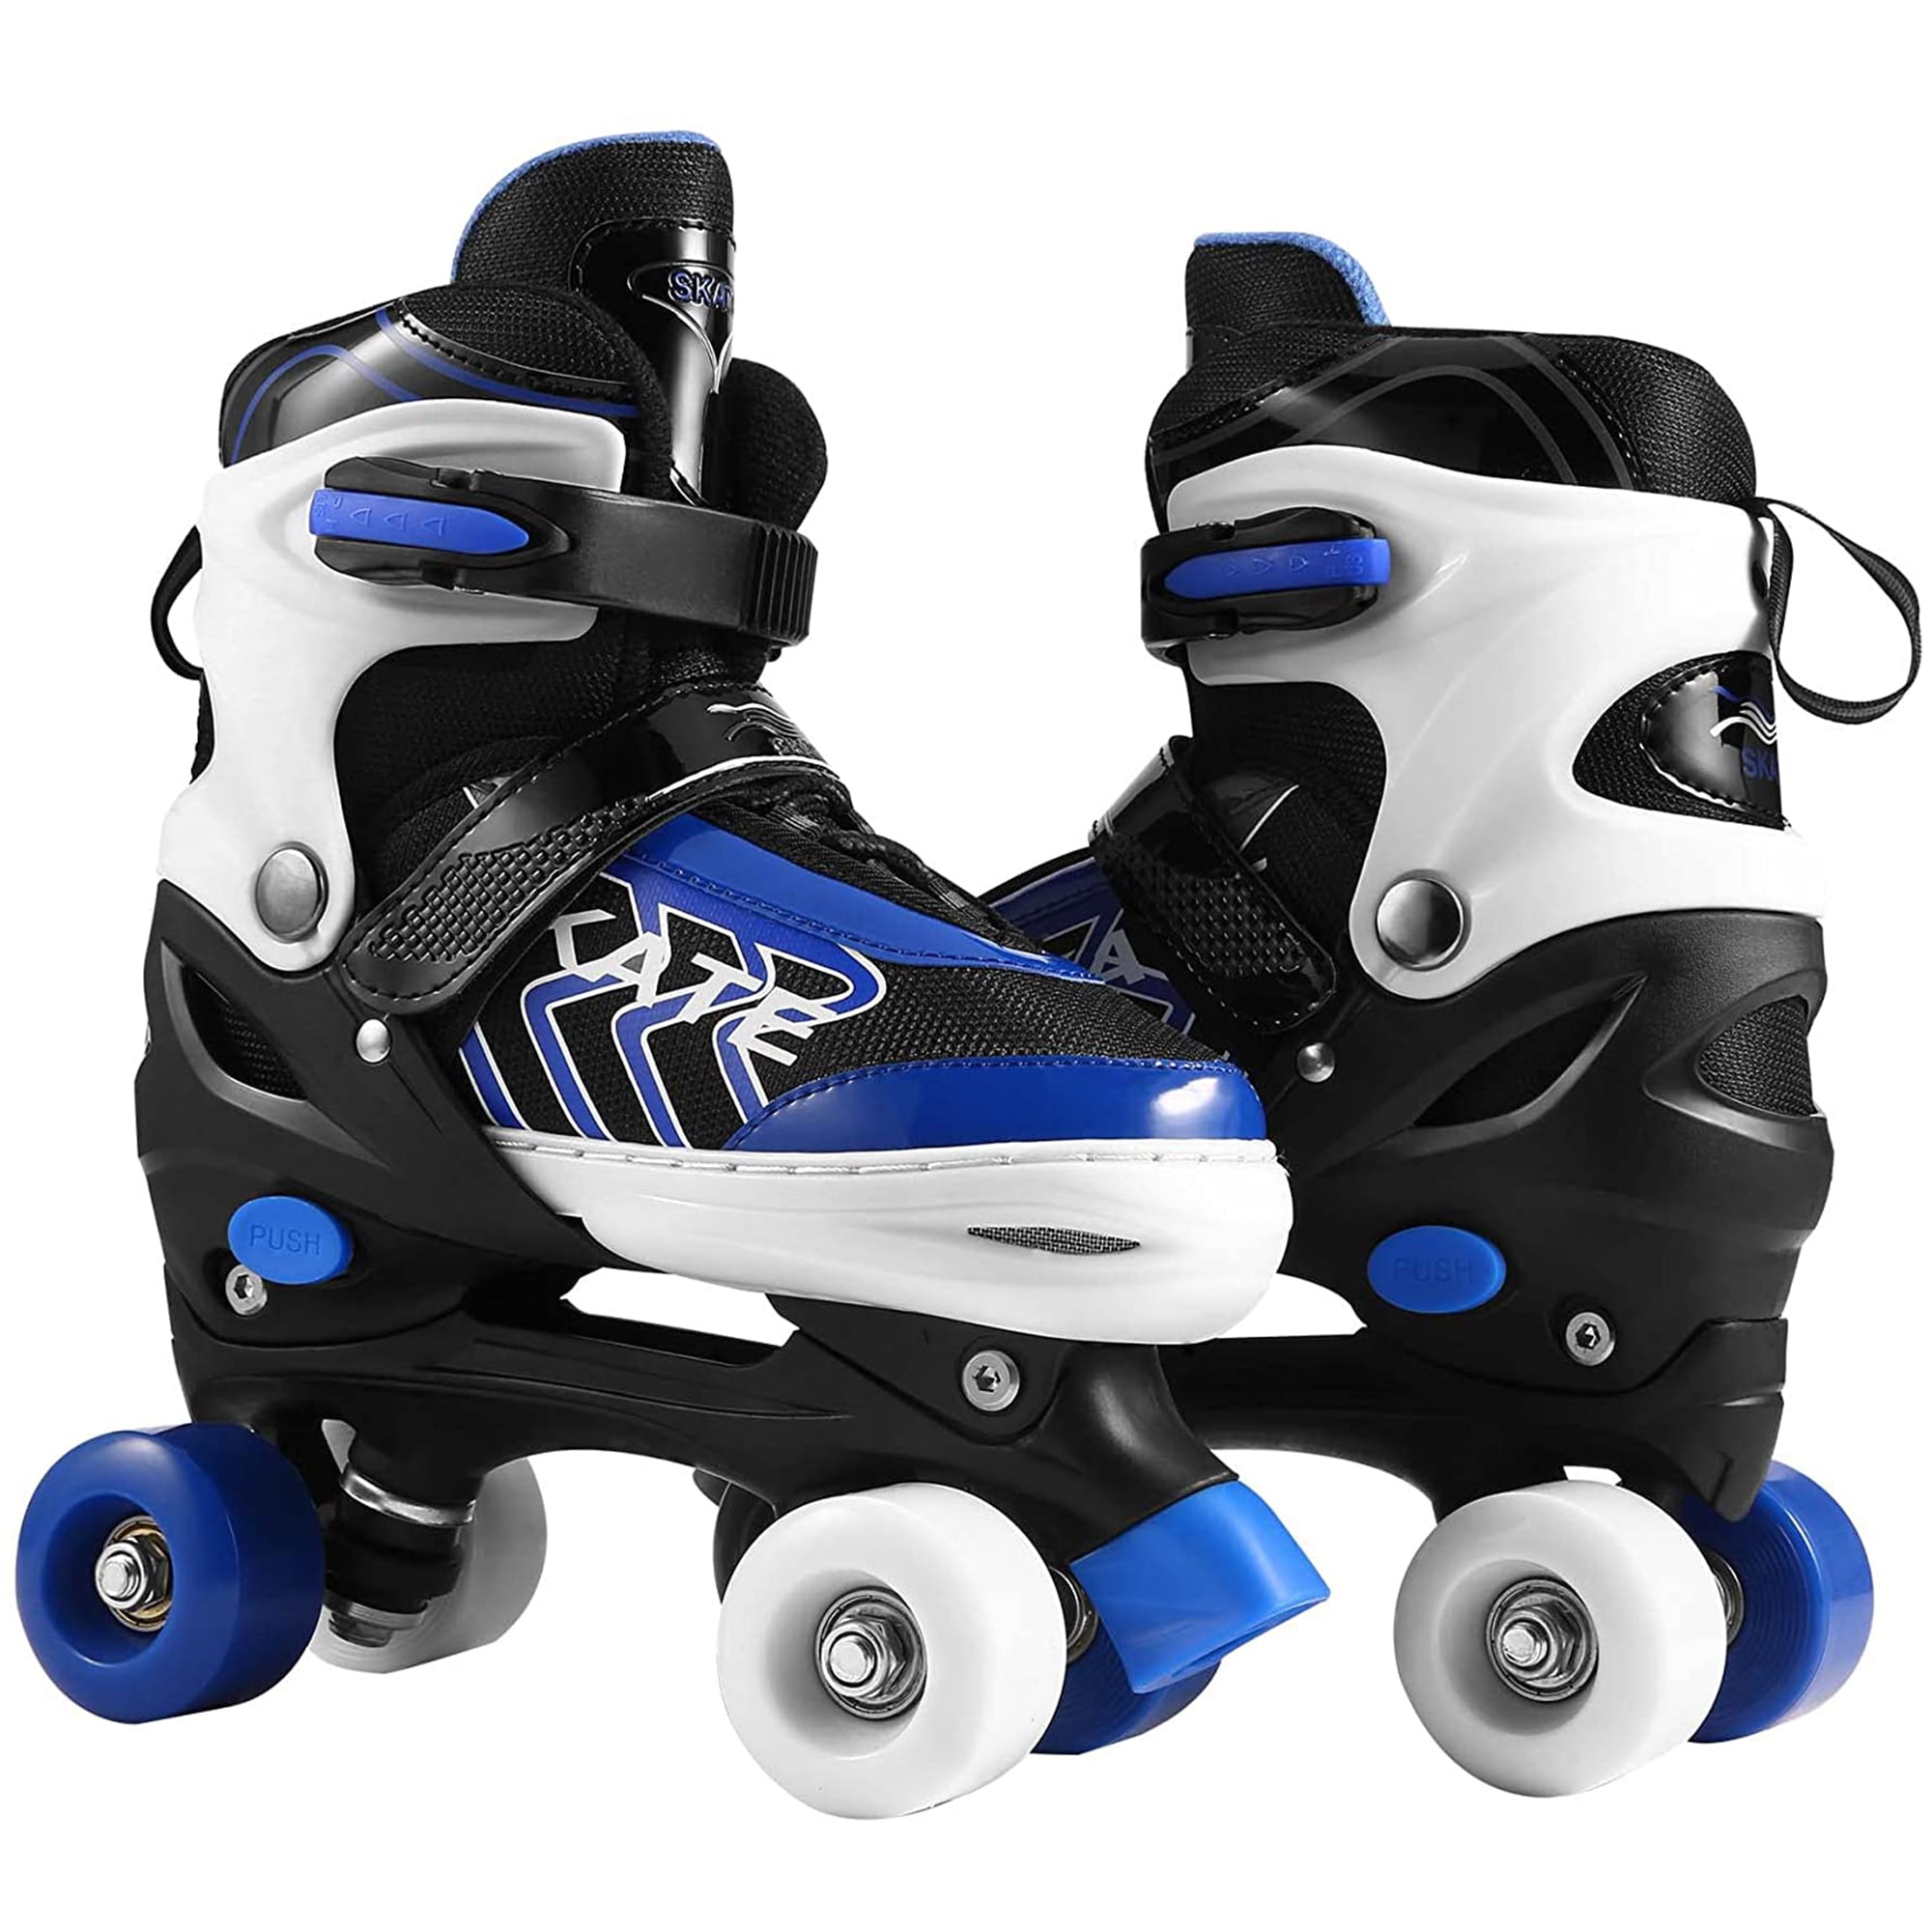 Beginners Safety Brakes Boys and Girls Professional Childrens Skates Adjustable Skates Roller Skates 